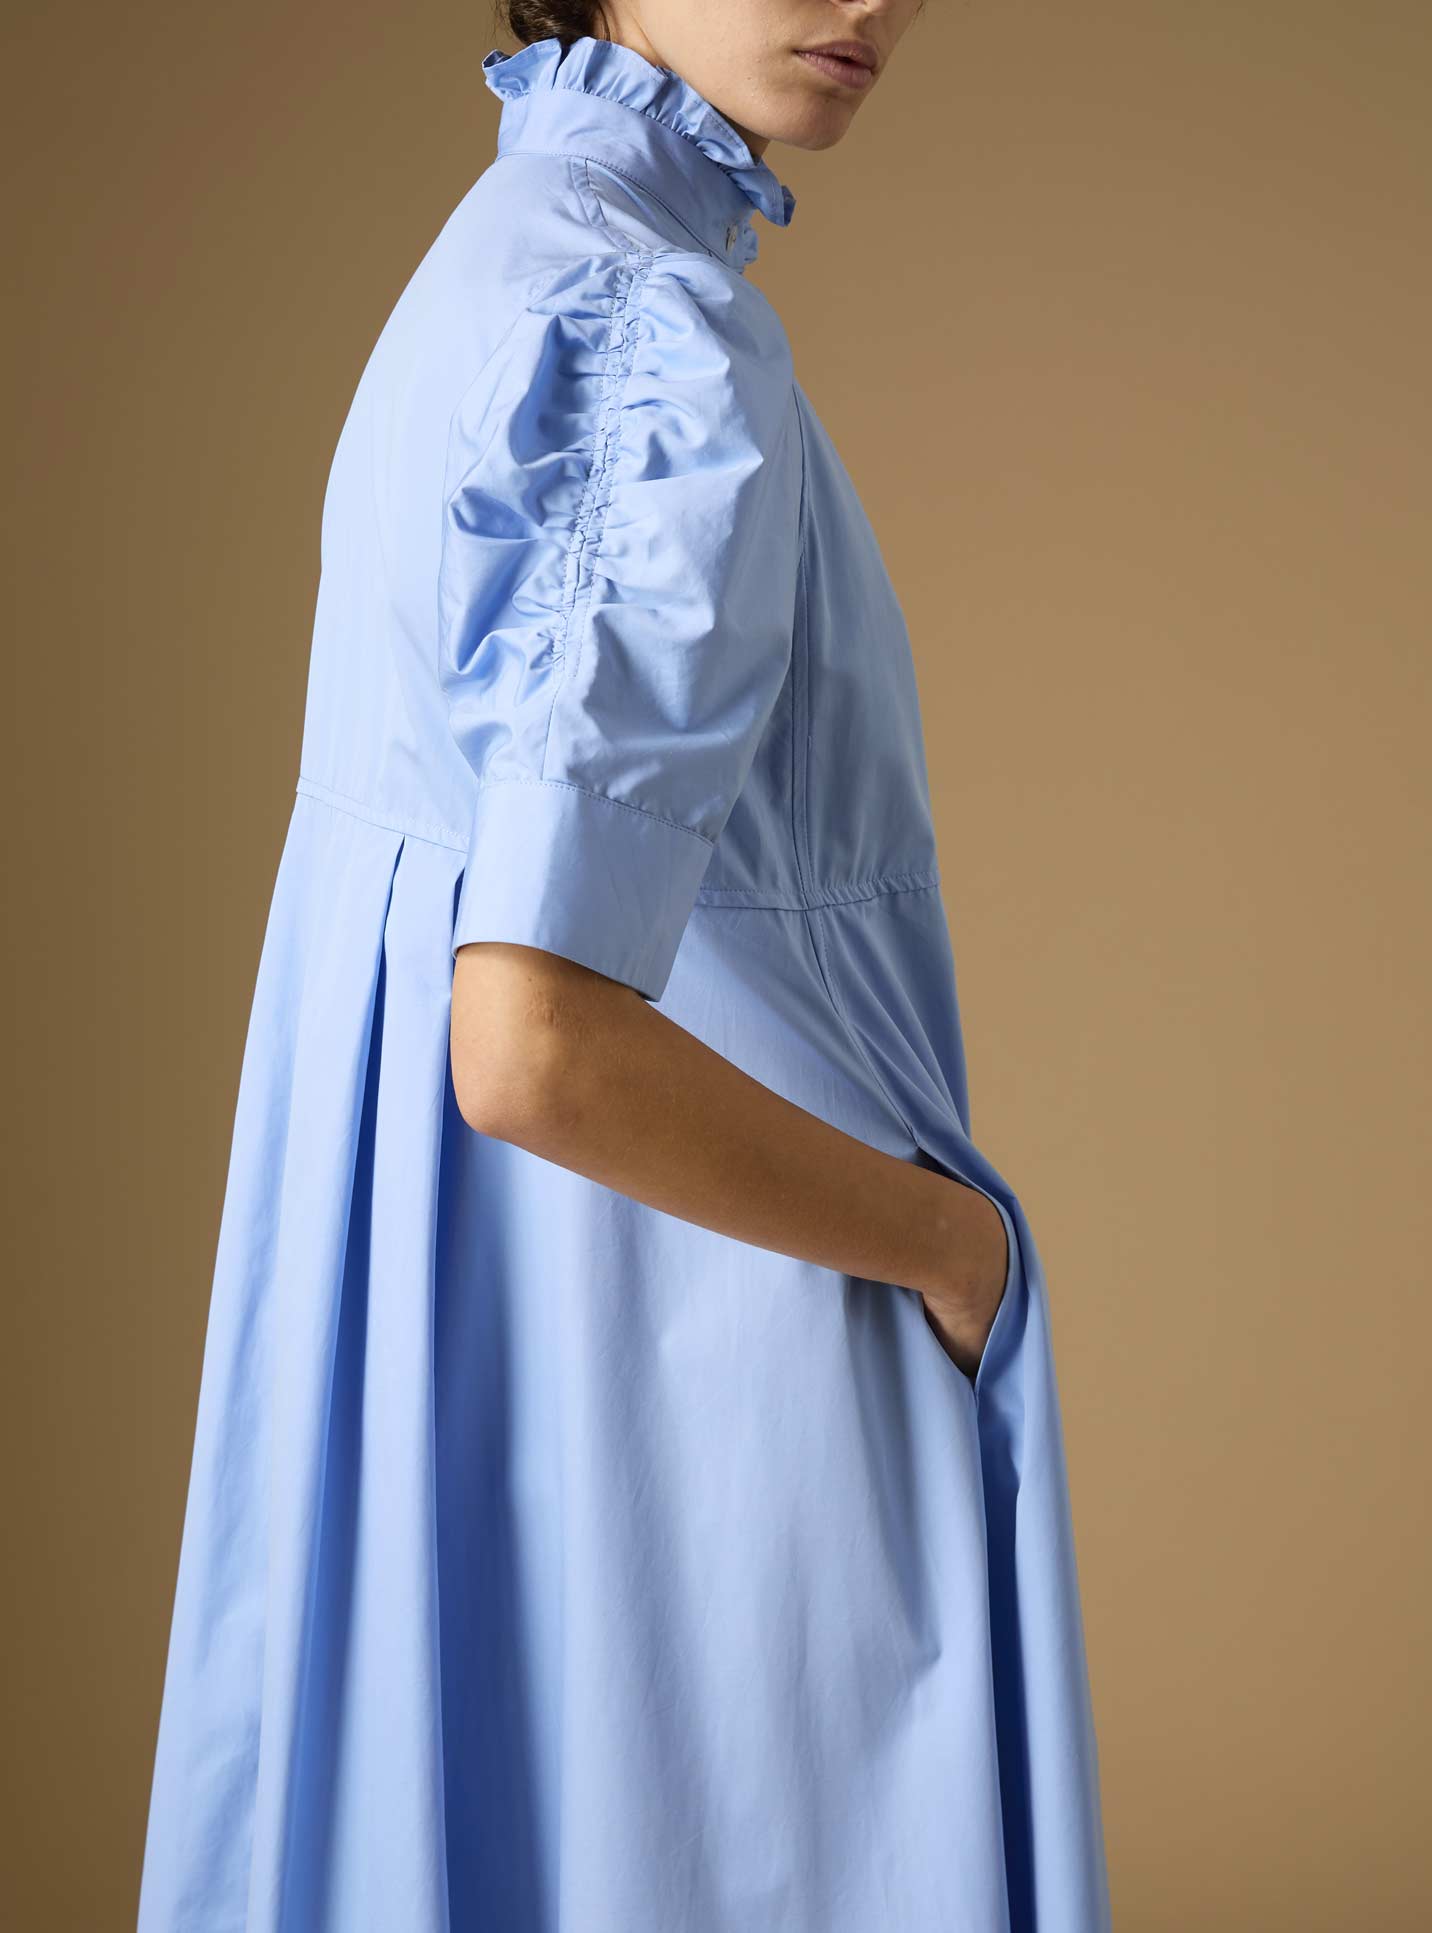 Side Sleeve detail of Venetia Plain Poplin Blue Dress by Thierry Colson